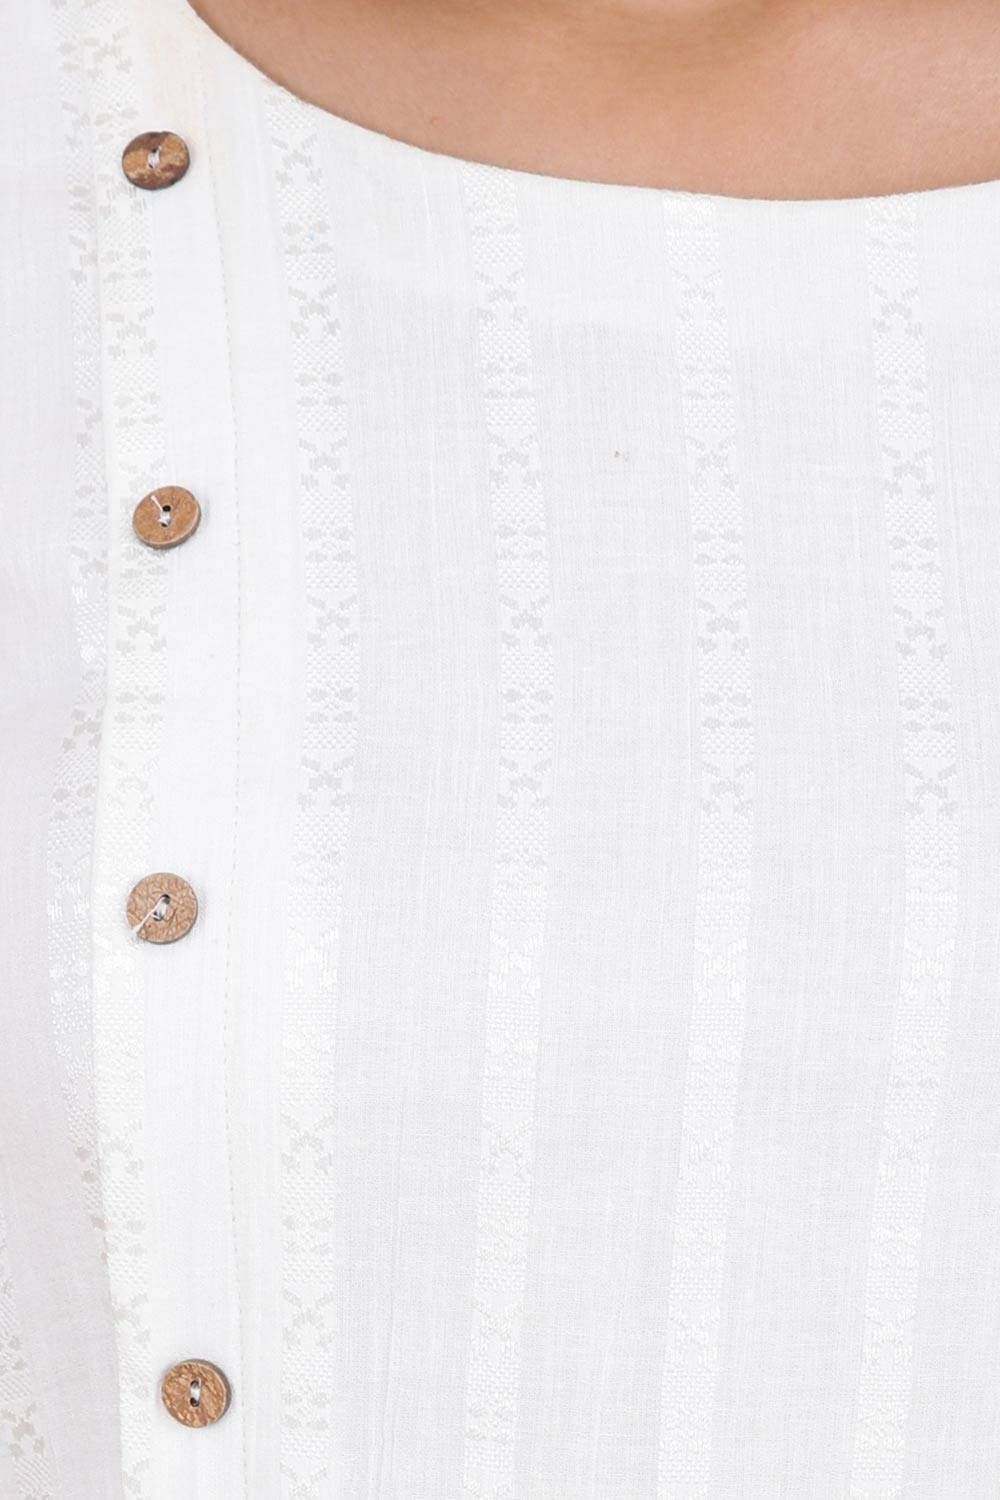 Women's White Buttoned Long Dress